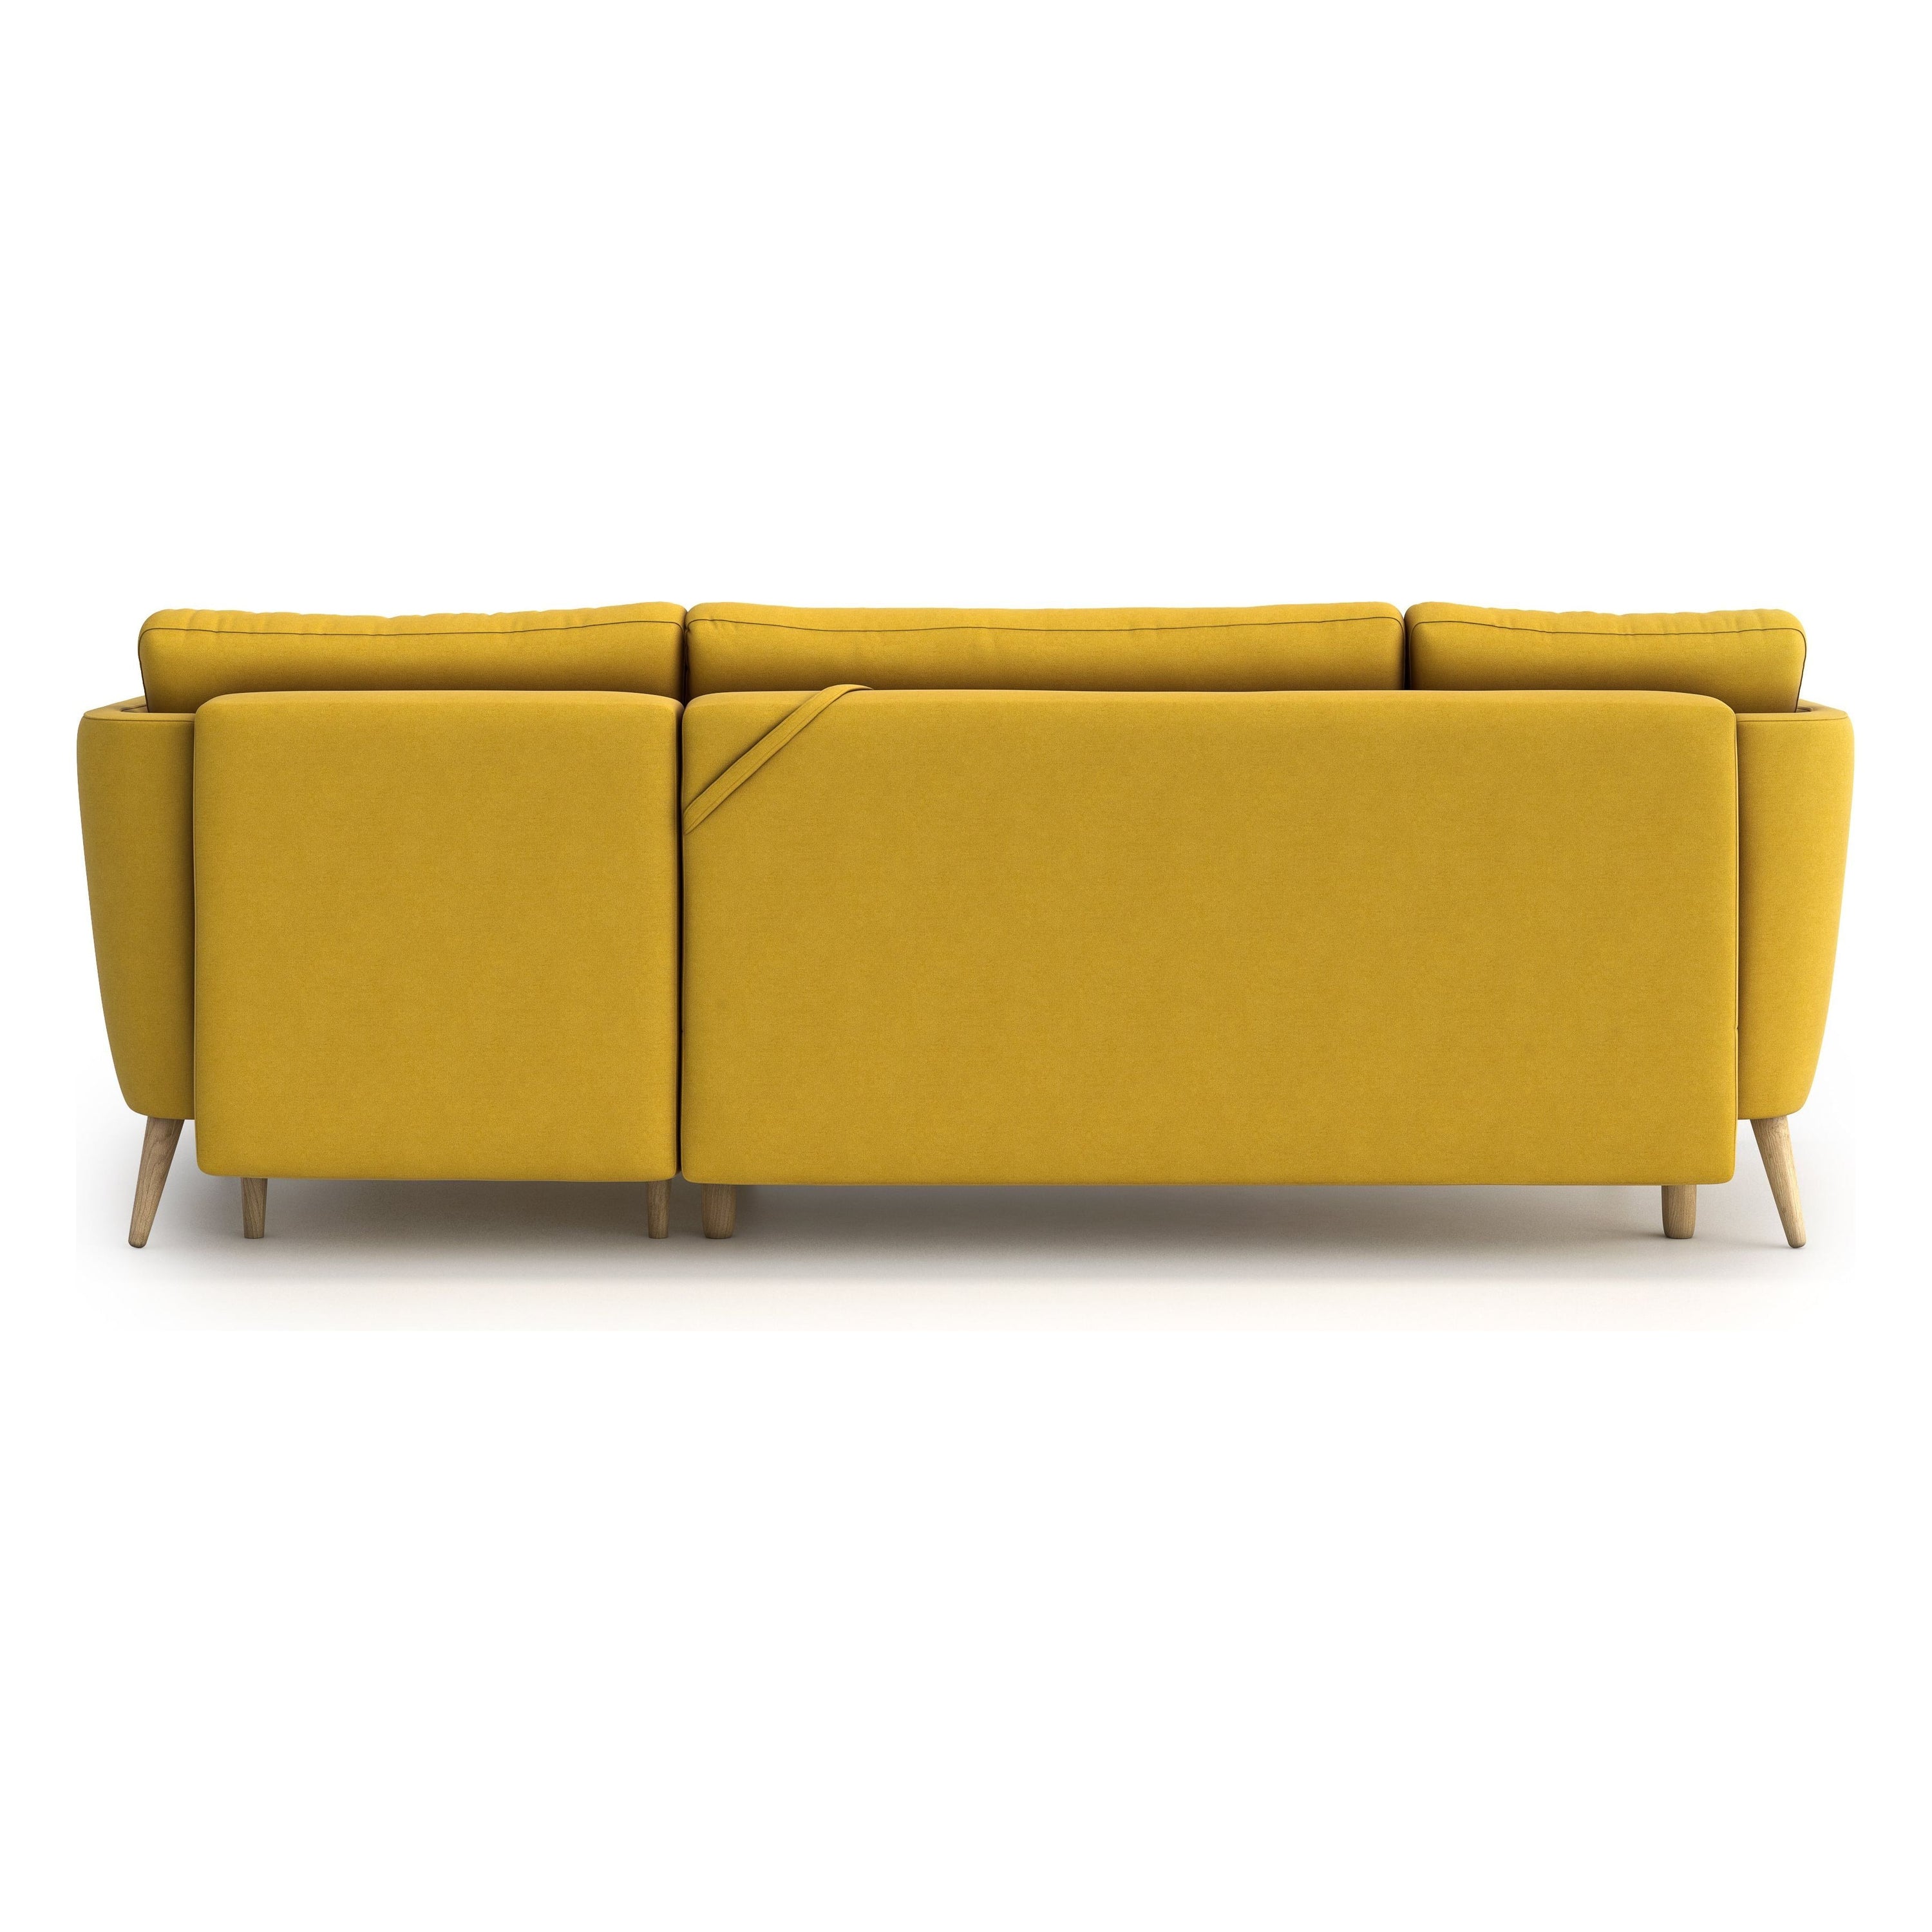 JANE kampinė sofa lova, geltona spalva, universali kampo pusė